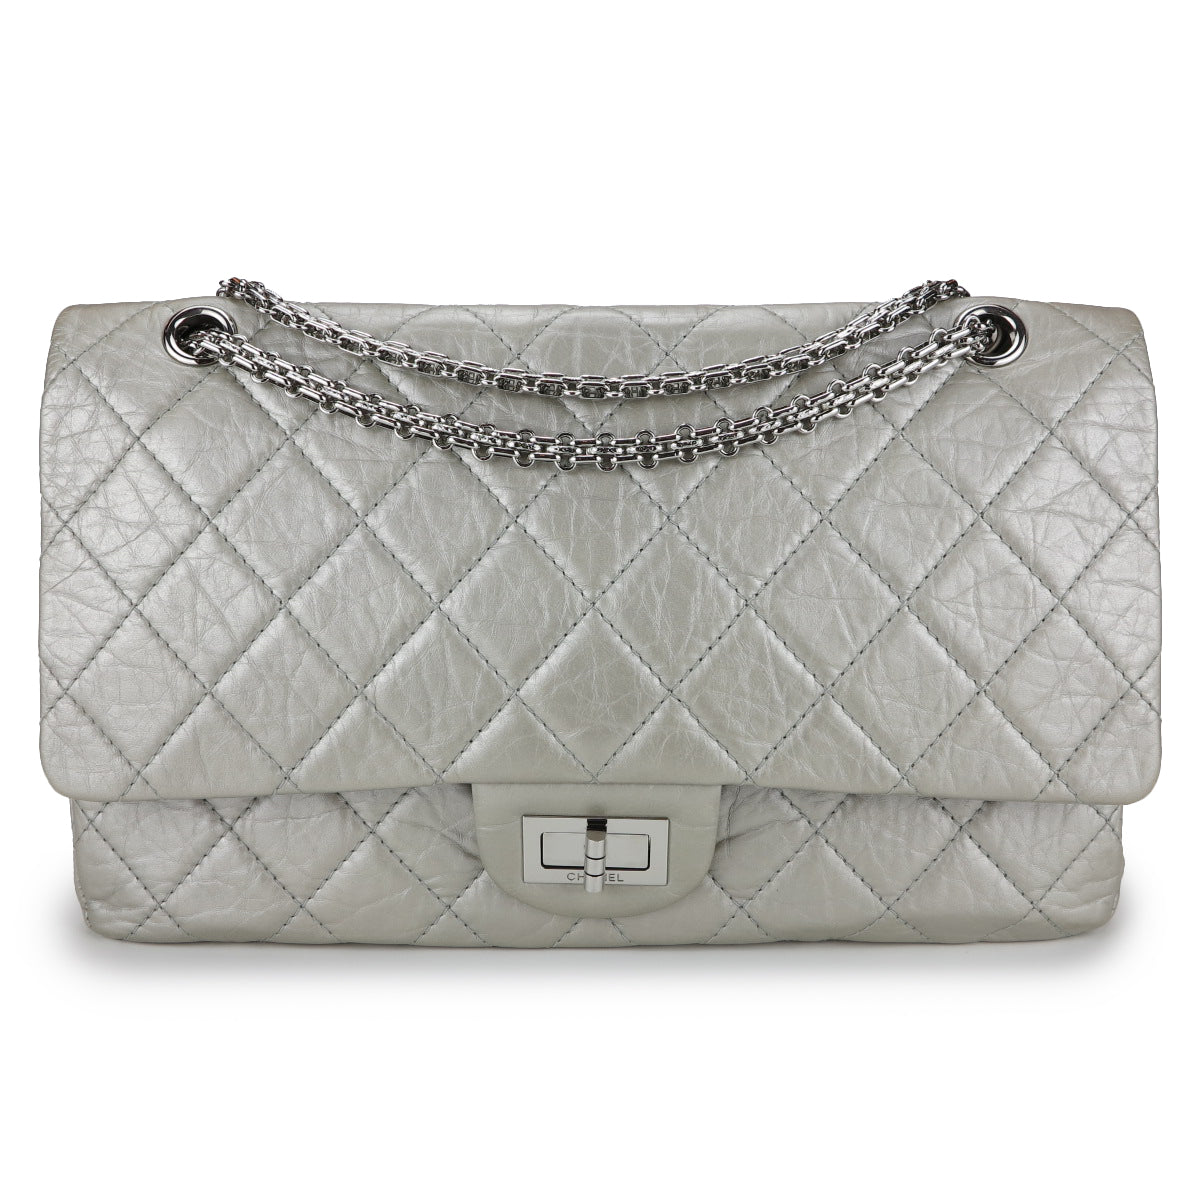 Chanel 2 55 Reissue Flap Bag Size 227 In Cream Silver Aged Calfskin Dearluxe